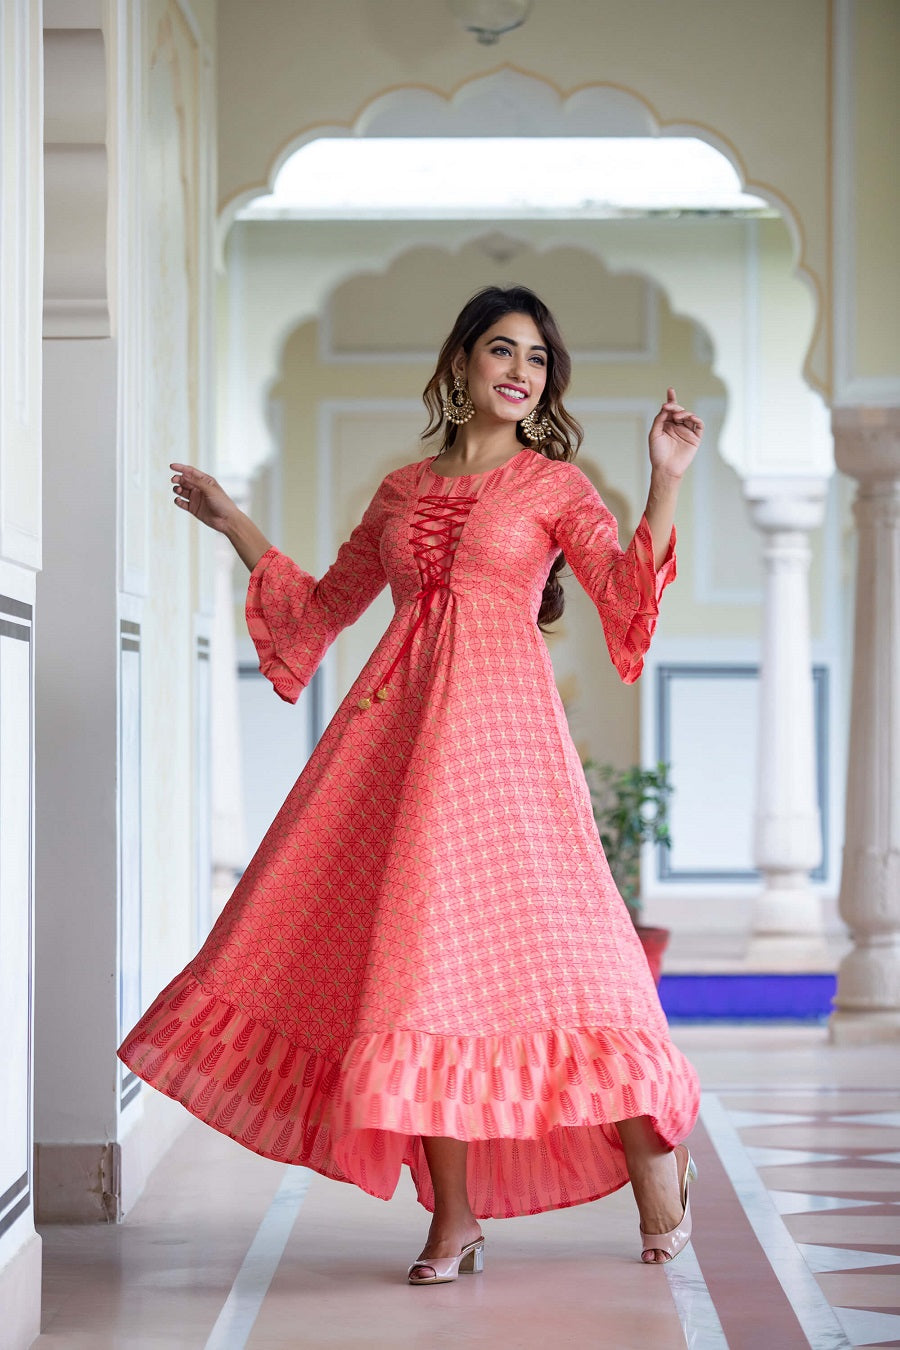 Pink Anarkali Dress